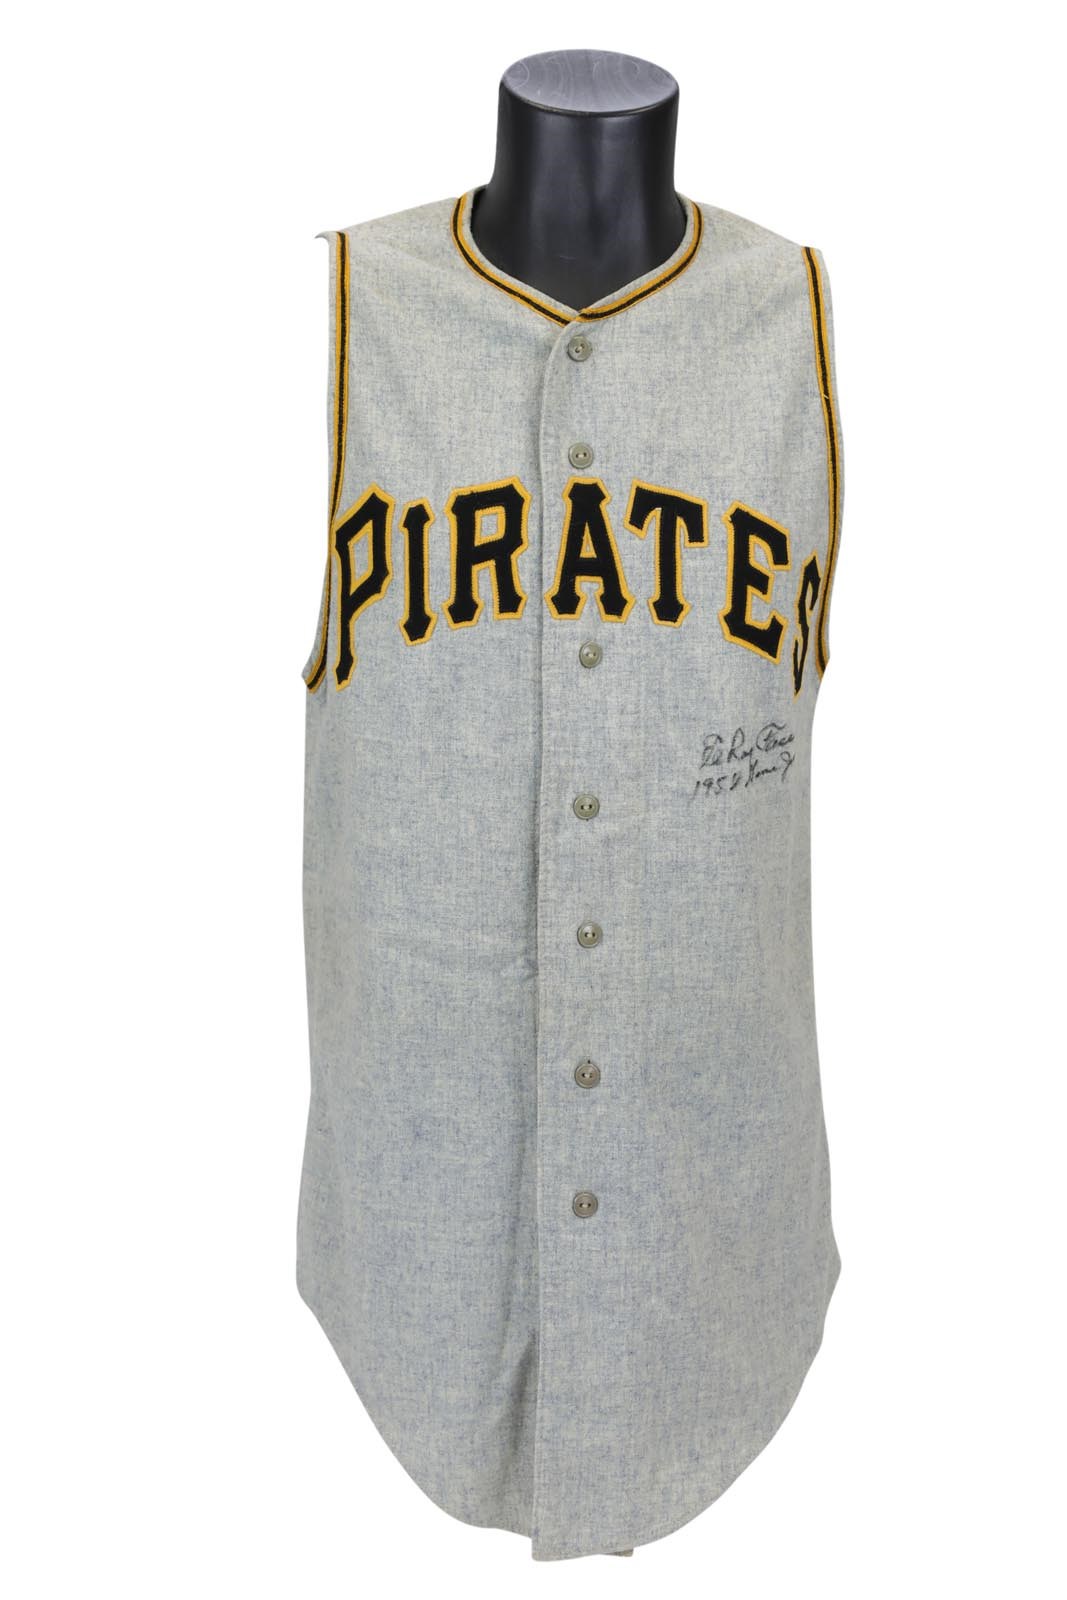 - 1958 Elroy Face Pittsburgh Pirates Game Worn Jersey